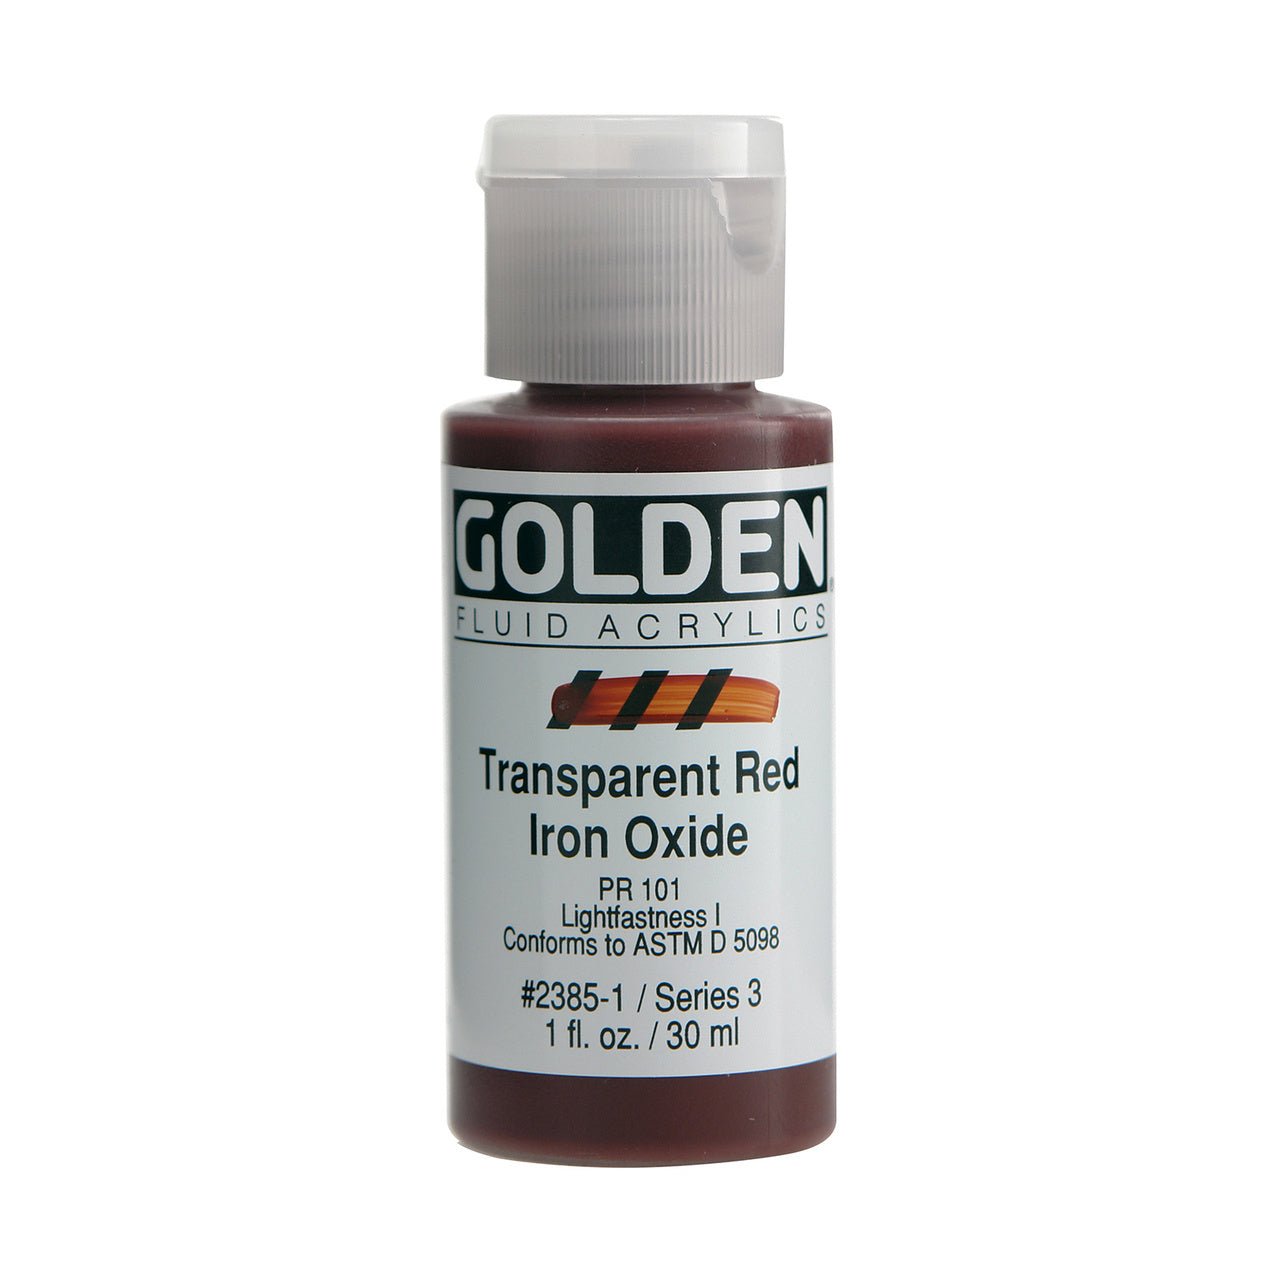 Golden Fluid Acrylic Transparent Red Iron Oxide 1 oz - merriartist.com